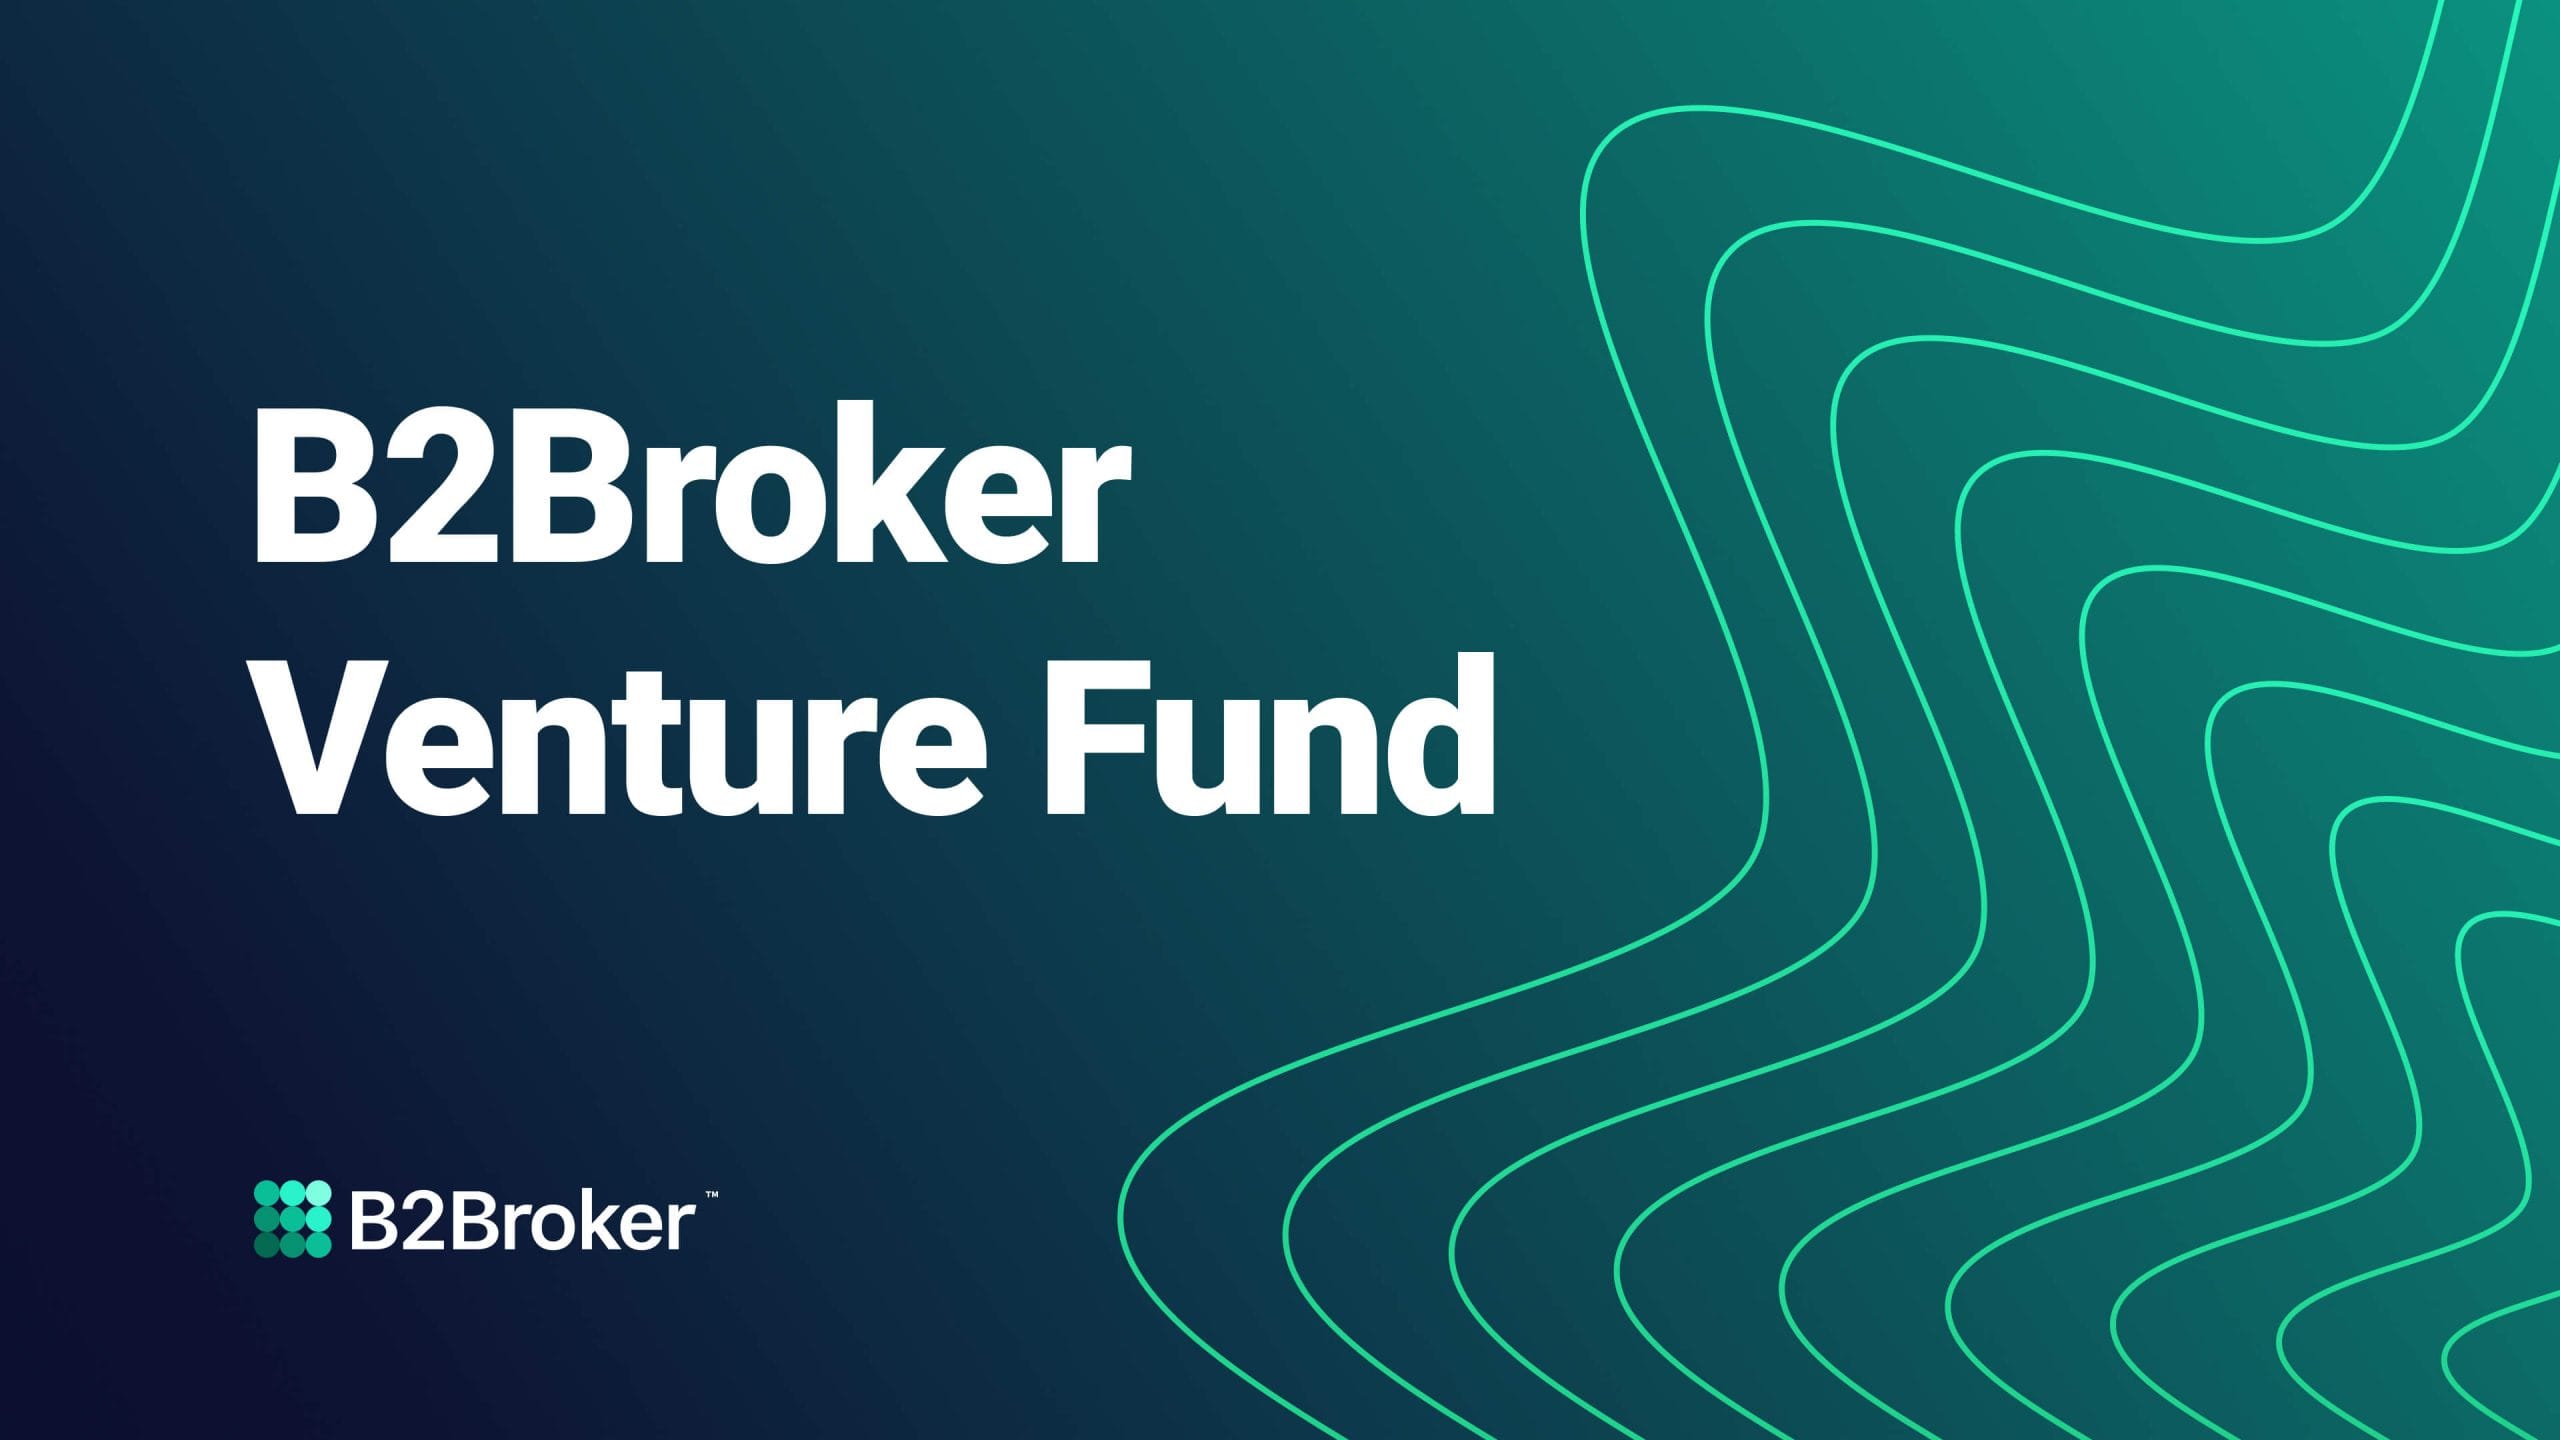 B2BrokerVC venture capital fund